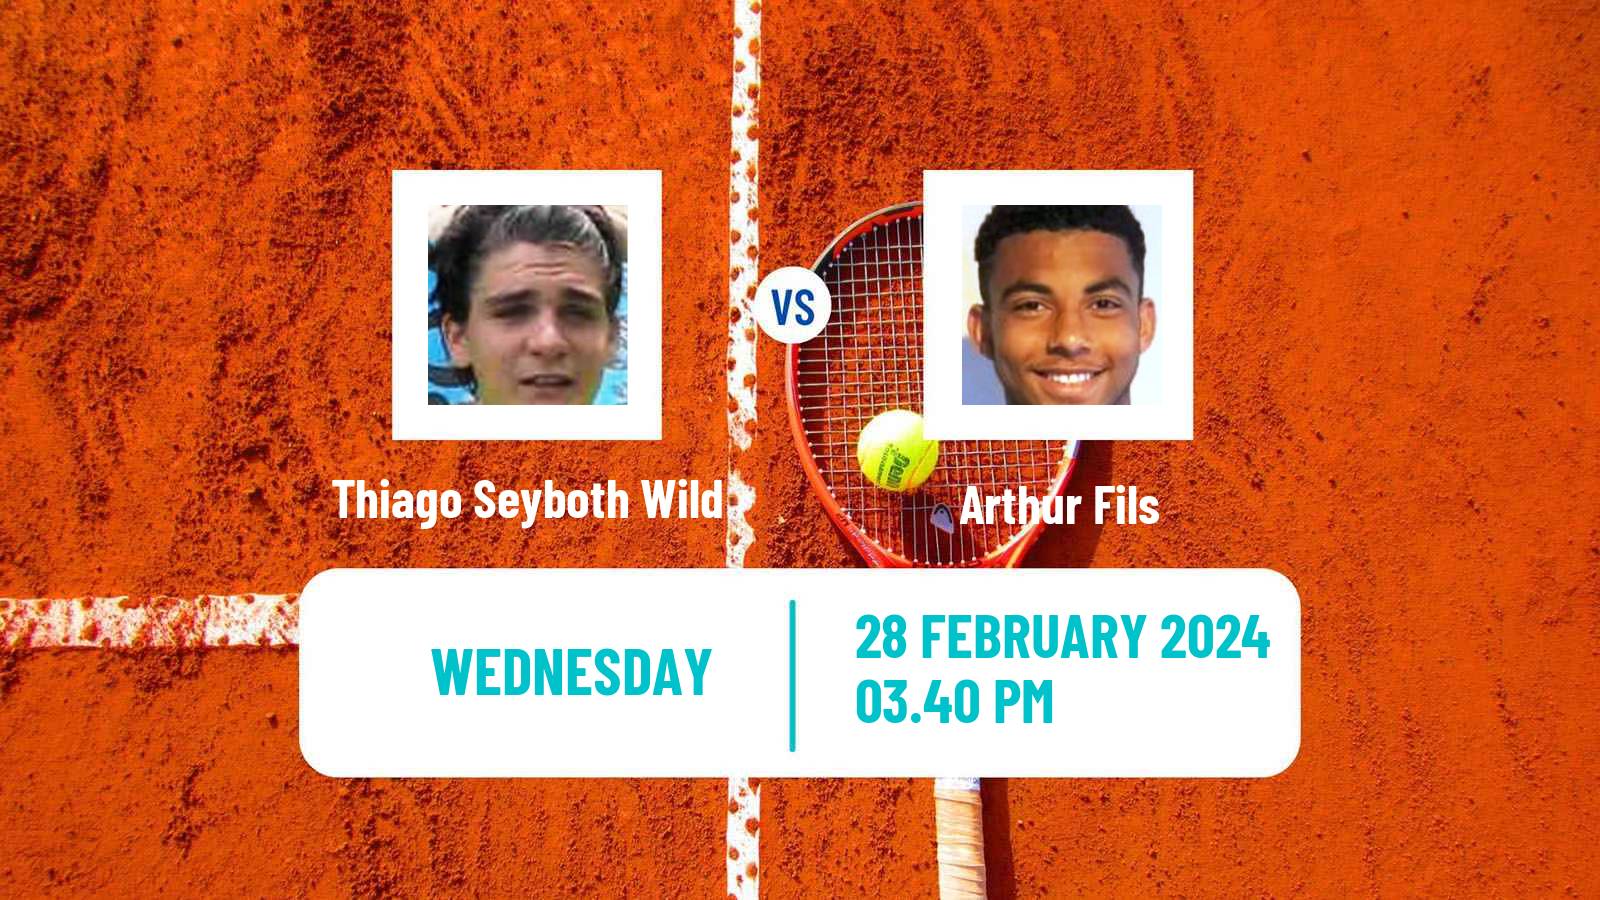 Tennis ATP Santiago Thiago Seyboth Wild - Arthur Fils